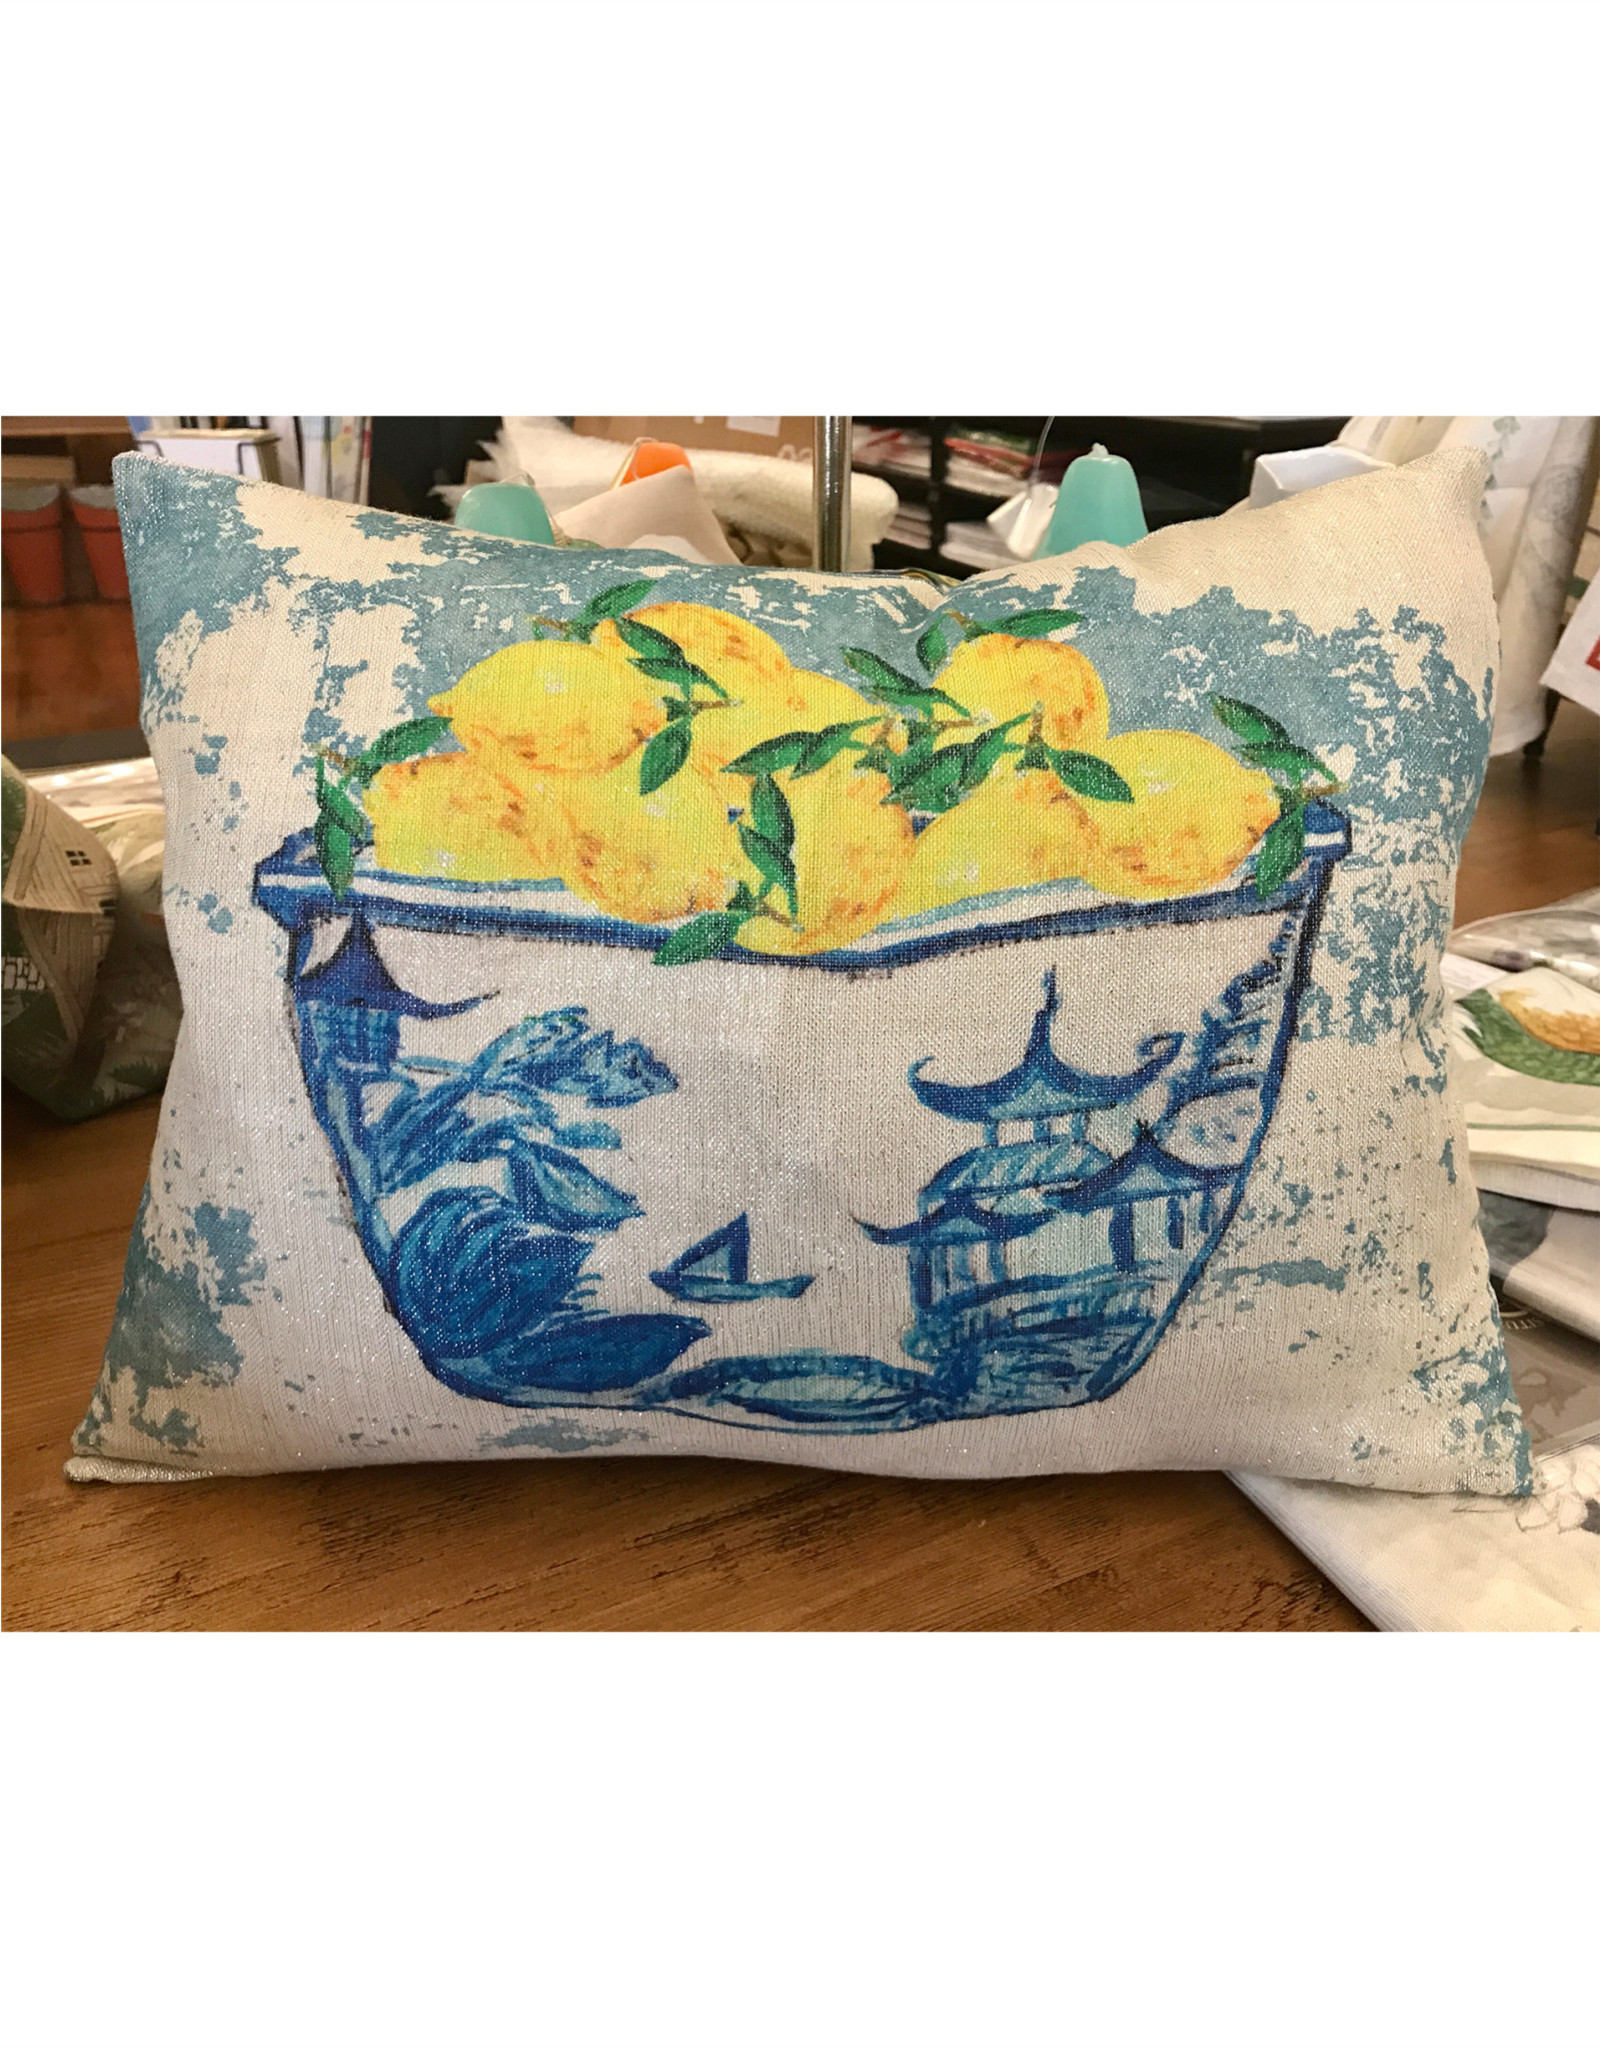 Pillow - Bowl with Lemons 12" x 16"